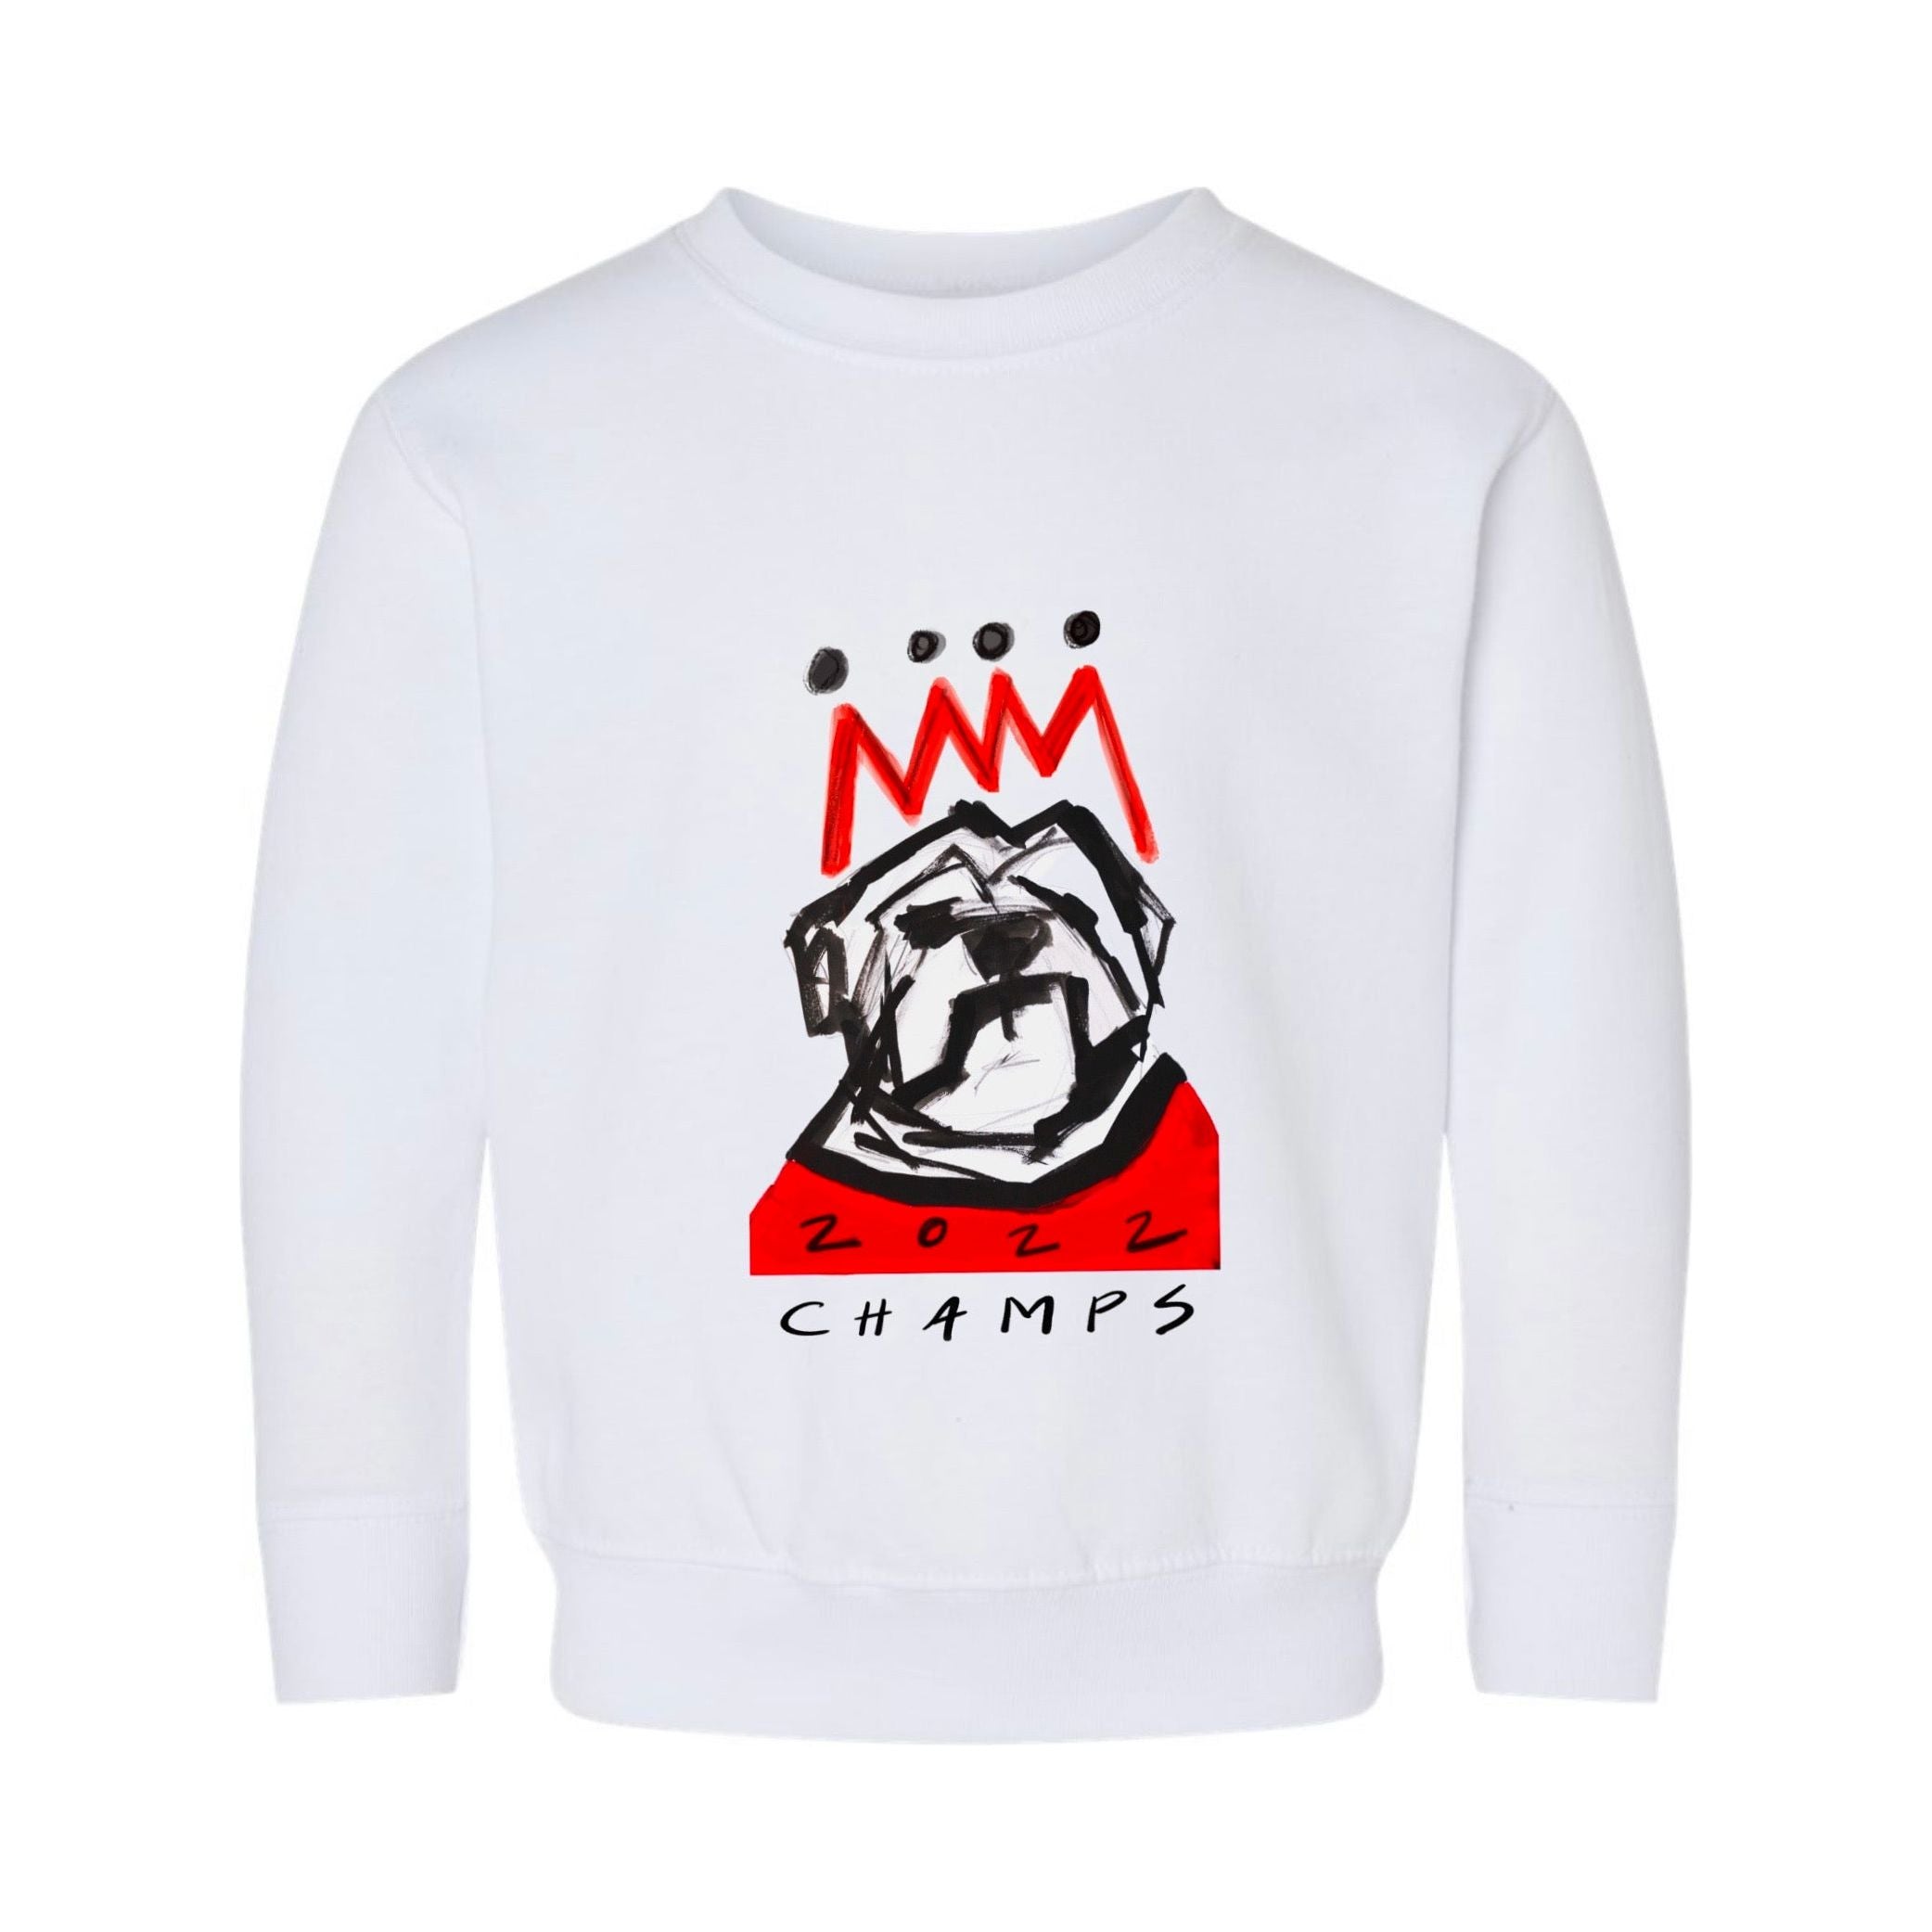 2022 Crowned Bulldog Youth Sweatshirt